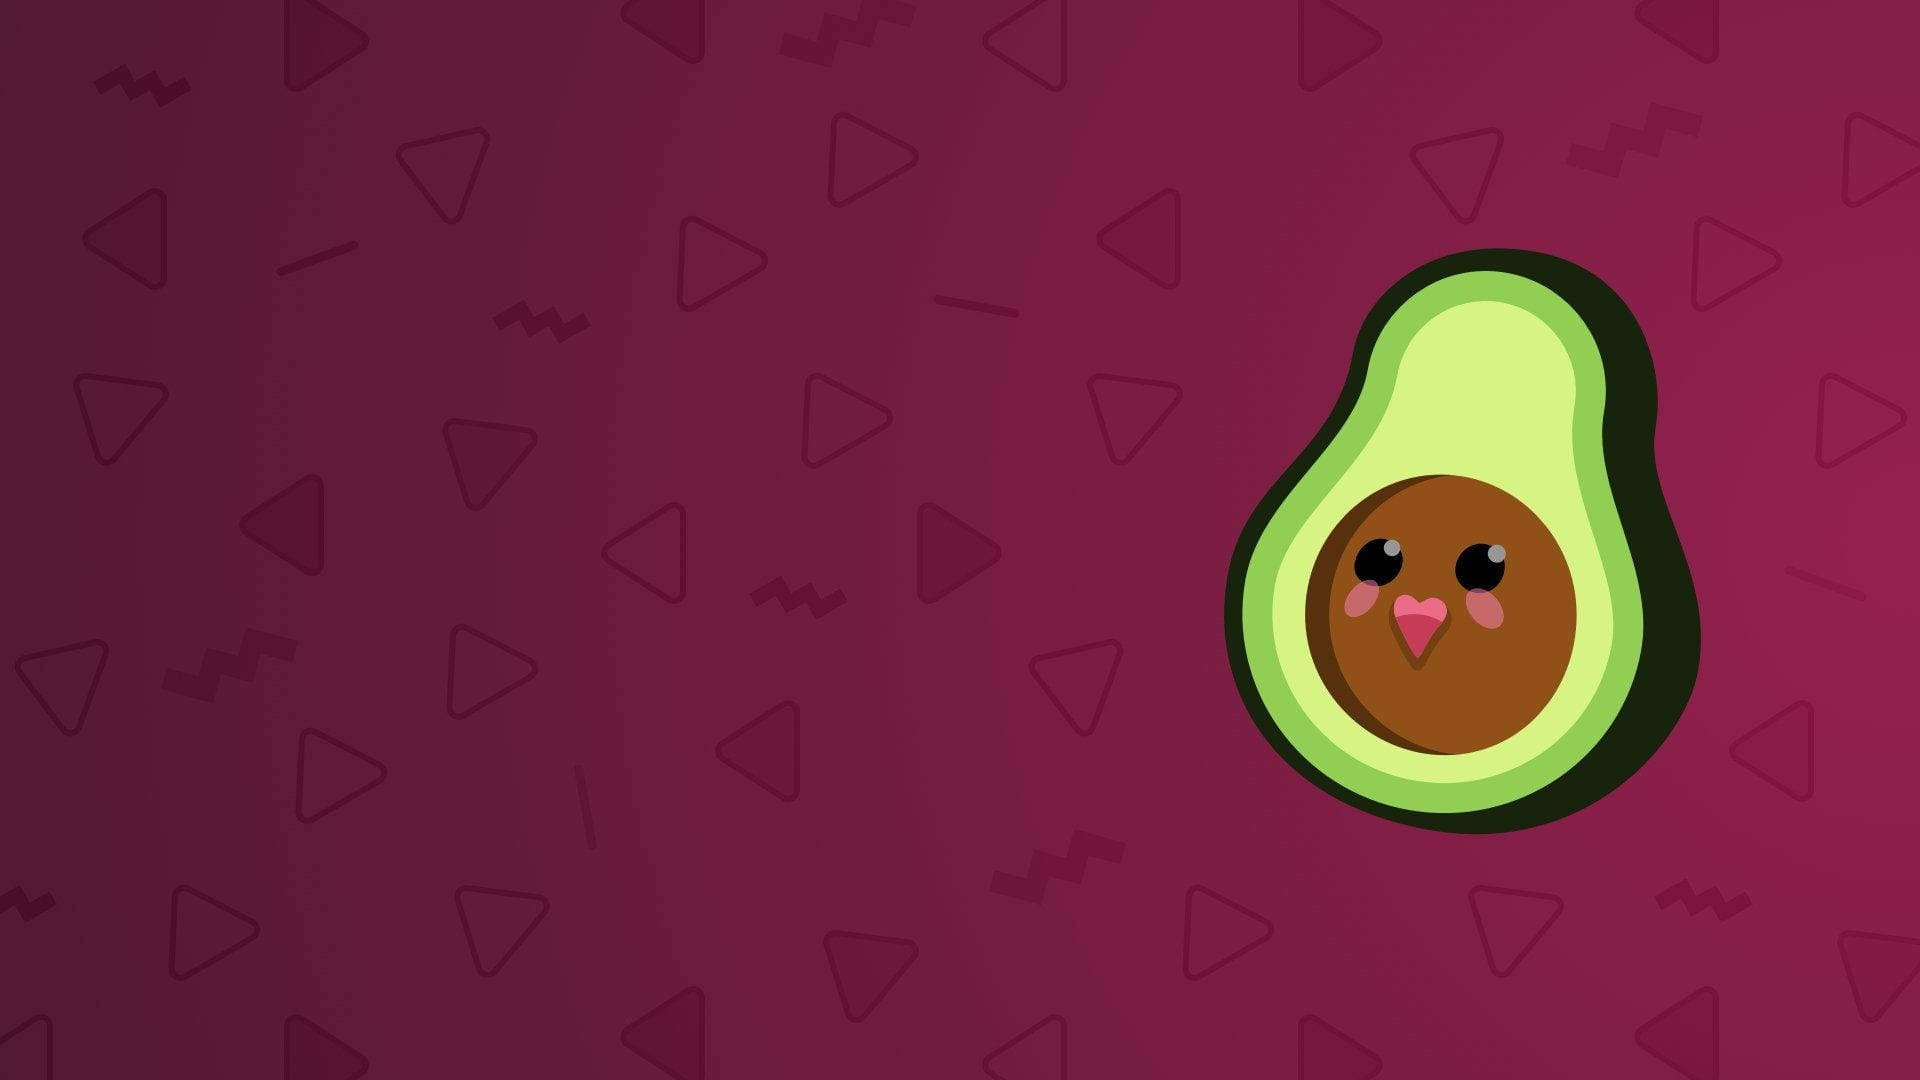 Avocado Background Images - Free Download on Freepik